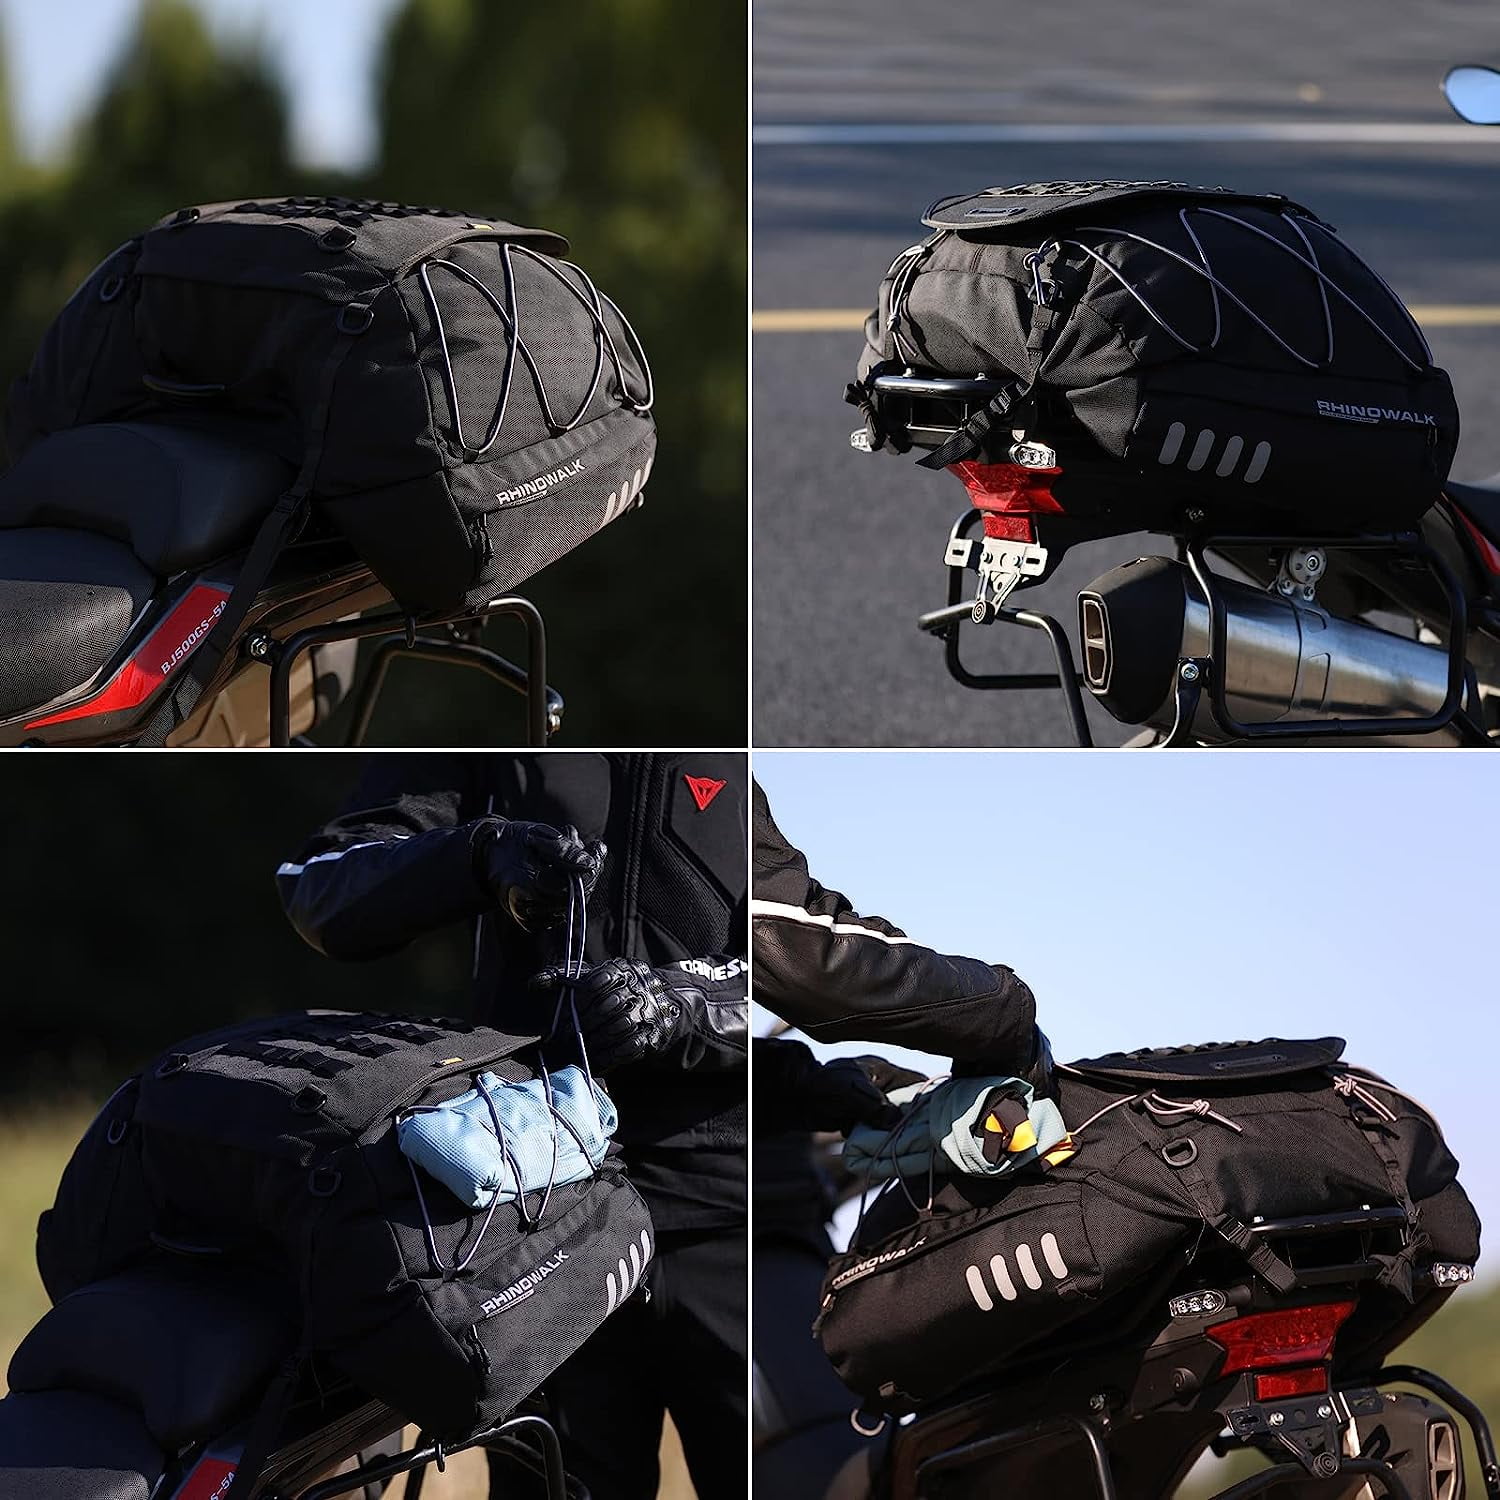 Rhinowalk Motorcycle Saddle Bag Motorbike Tail Bag Waterproof